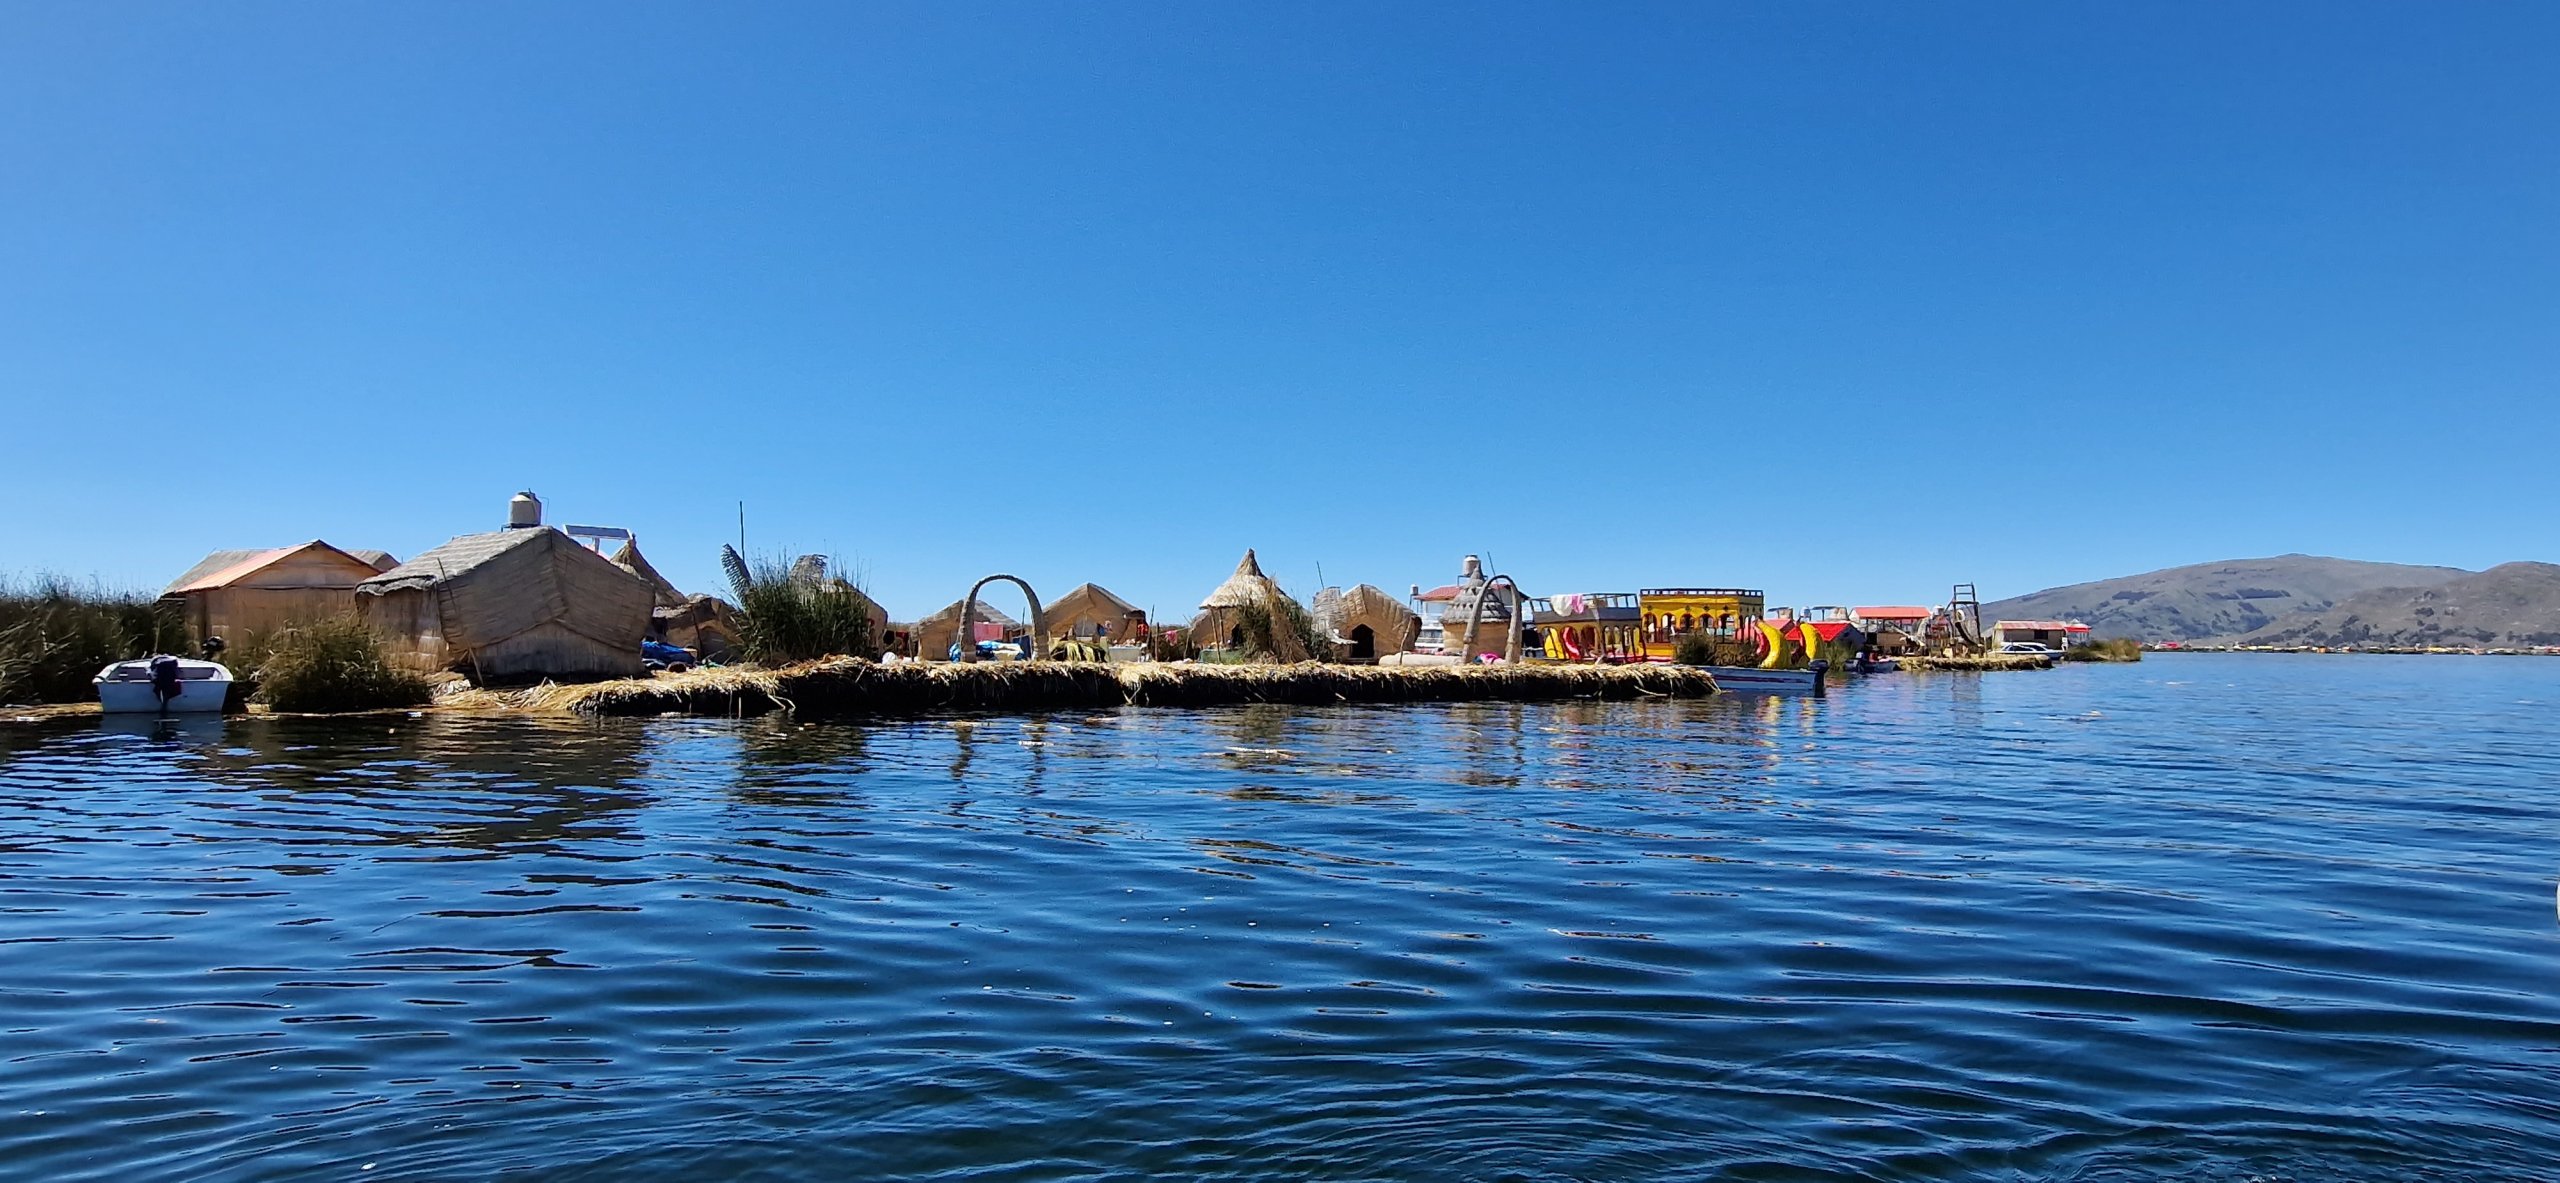 Cesta po Peru – jezero Titicaca (1. část)